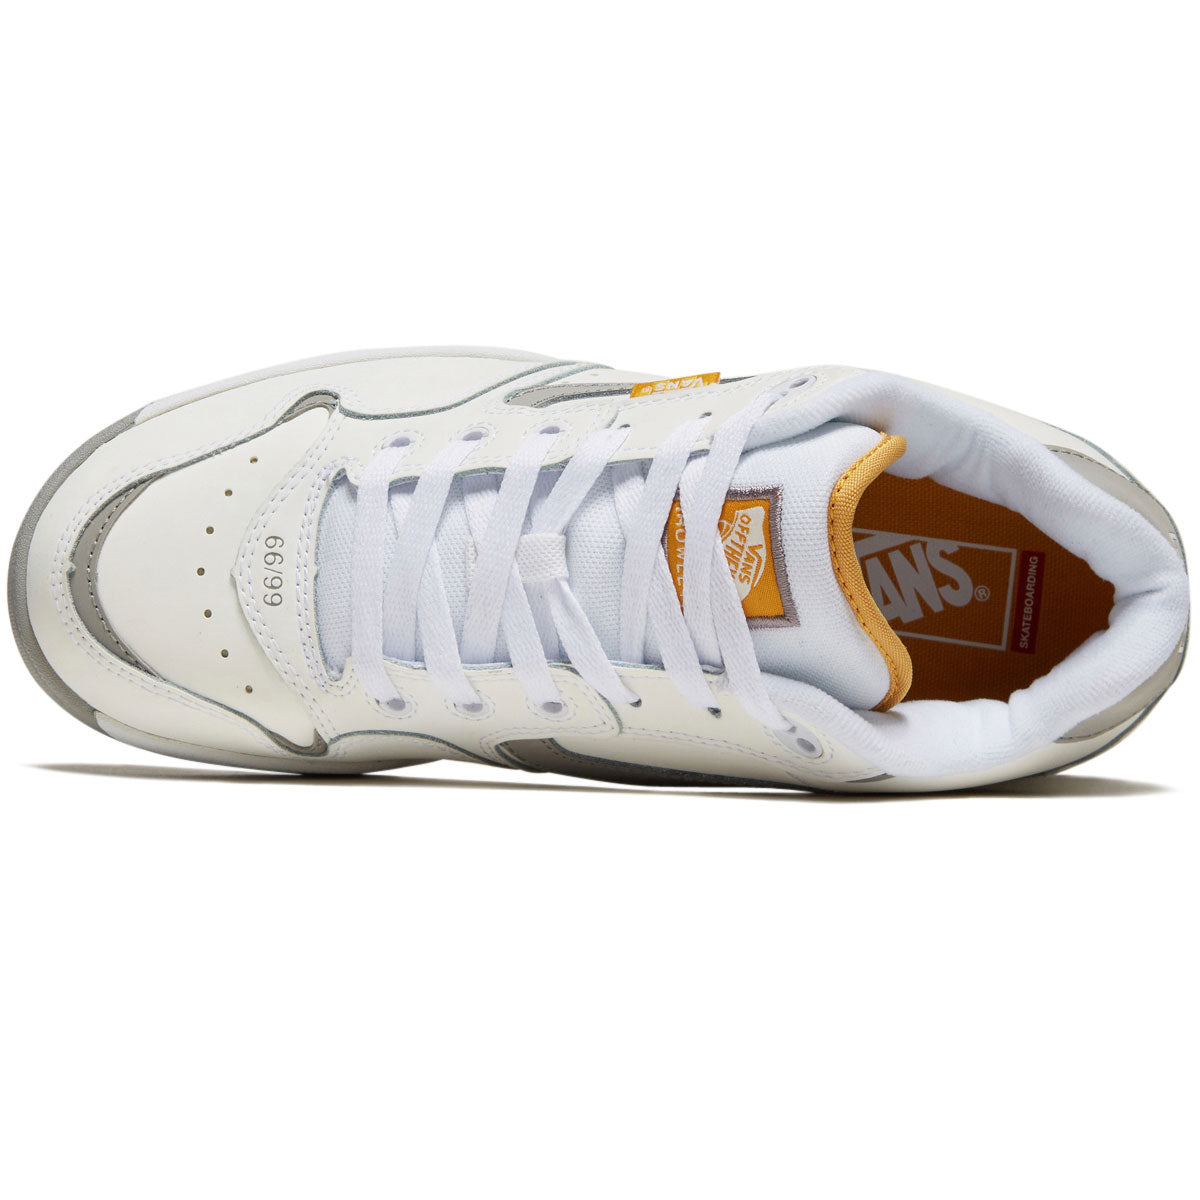 Vans Rowley XLT Shoes - White/Grey image 3